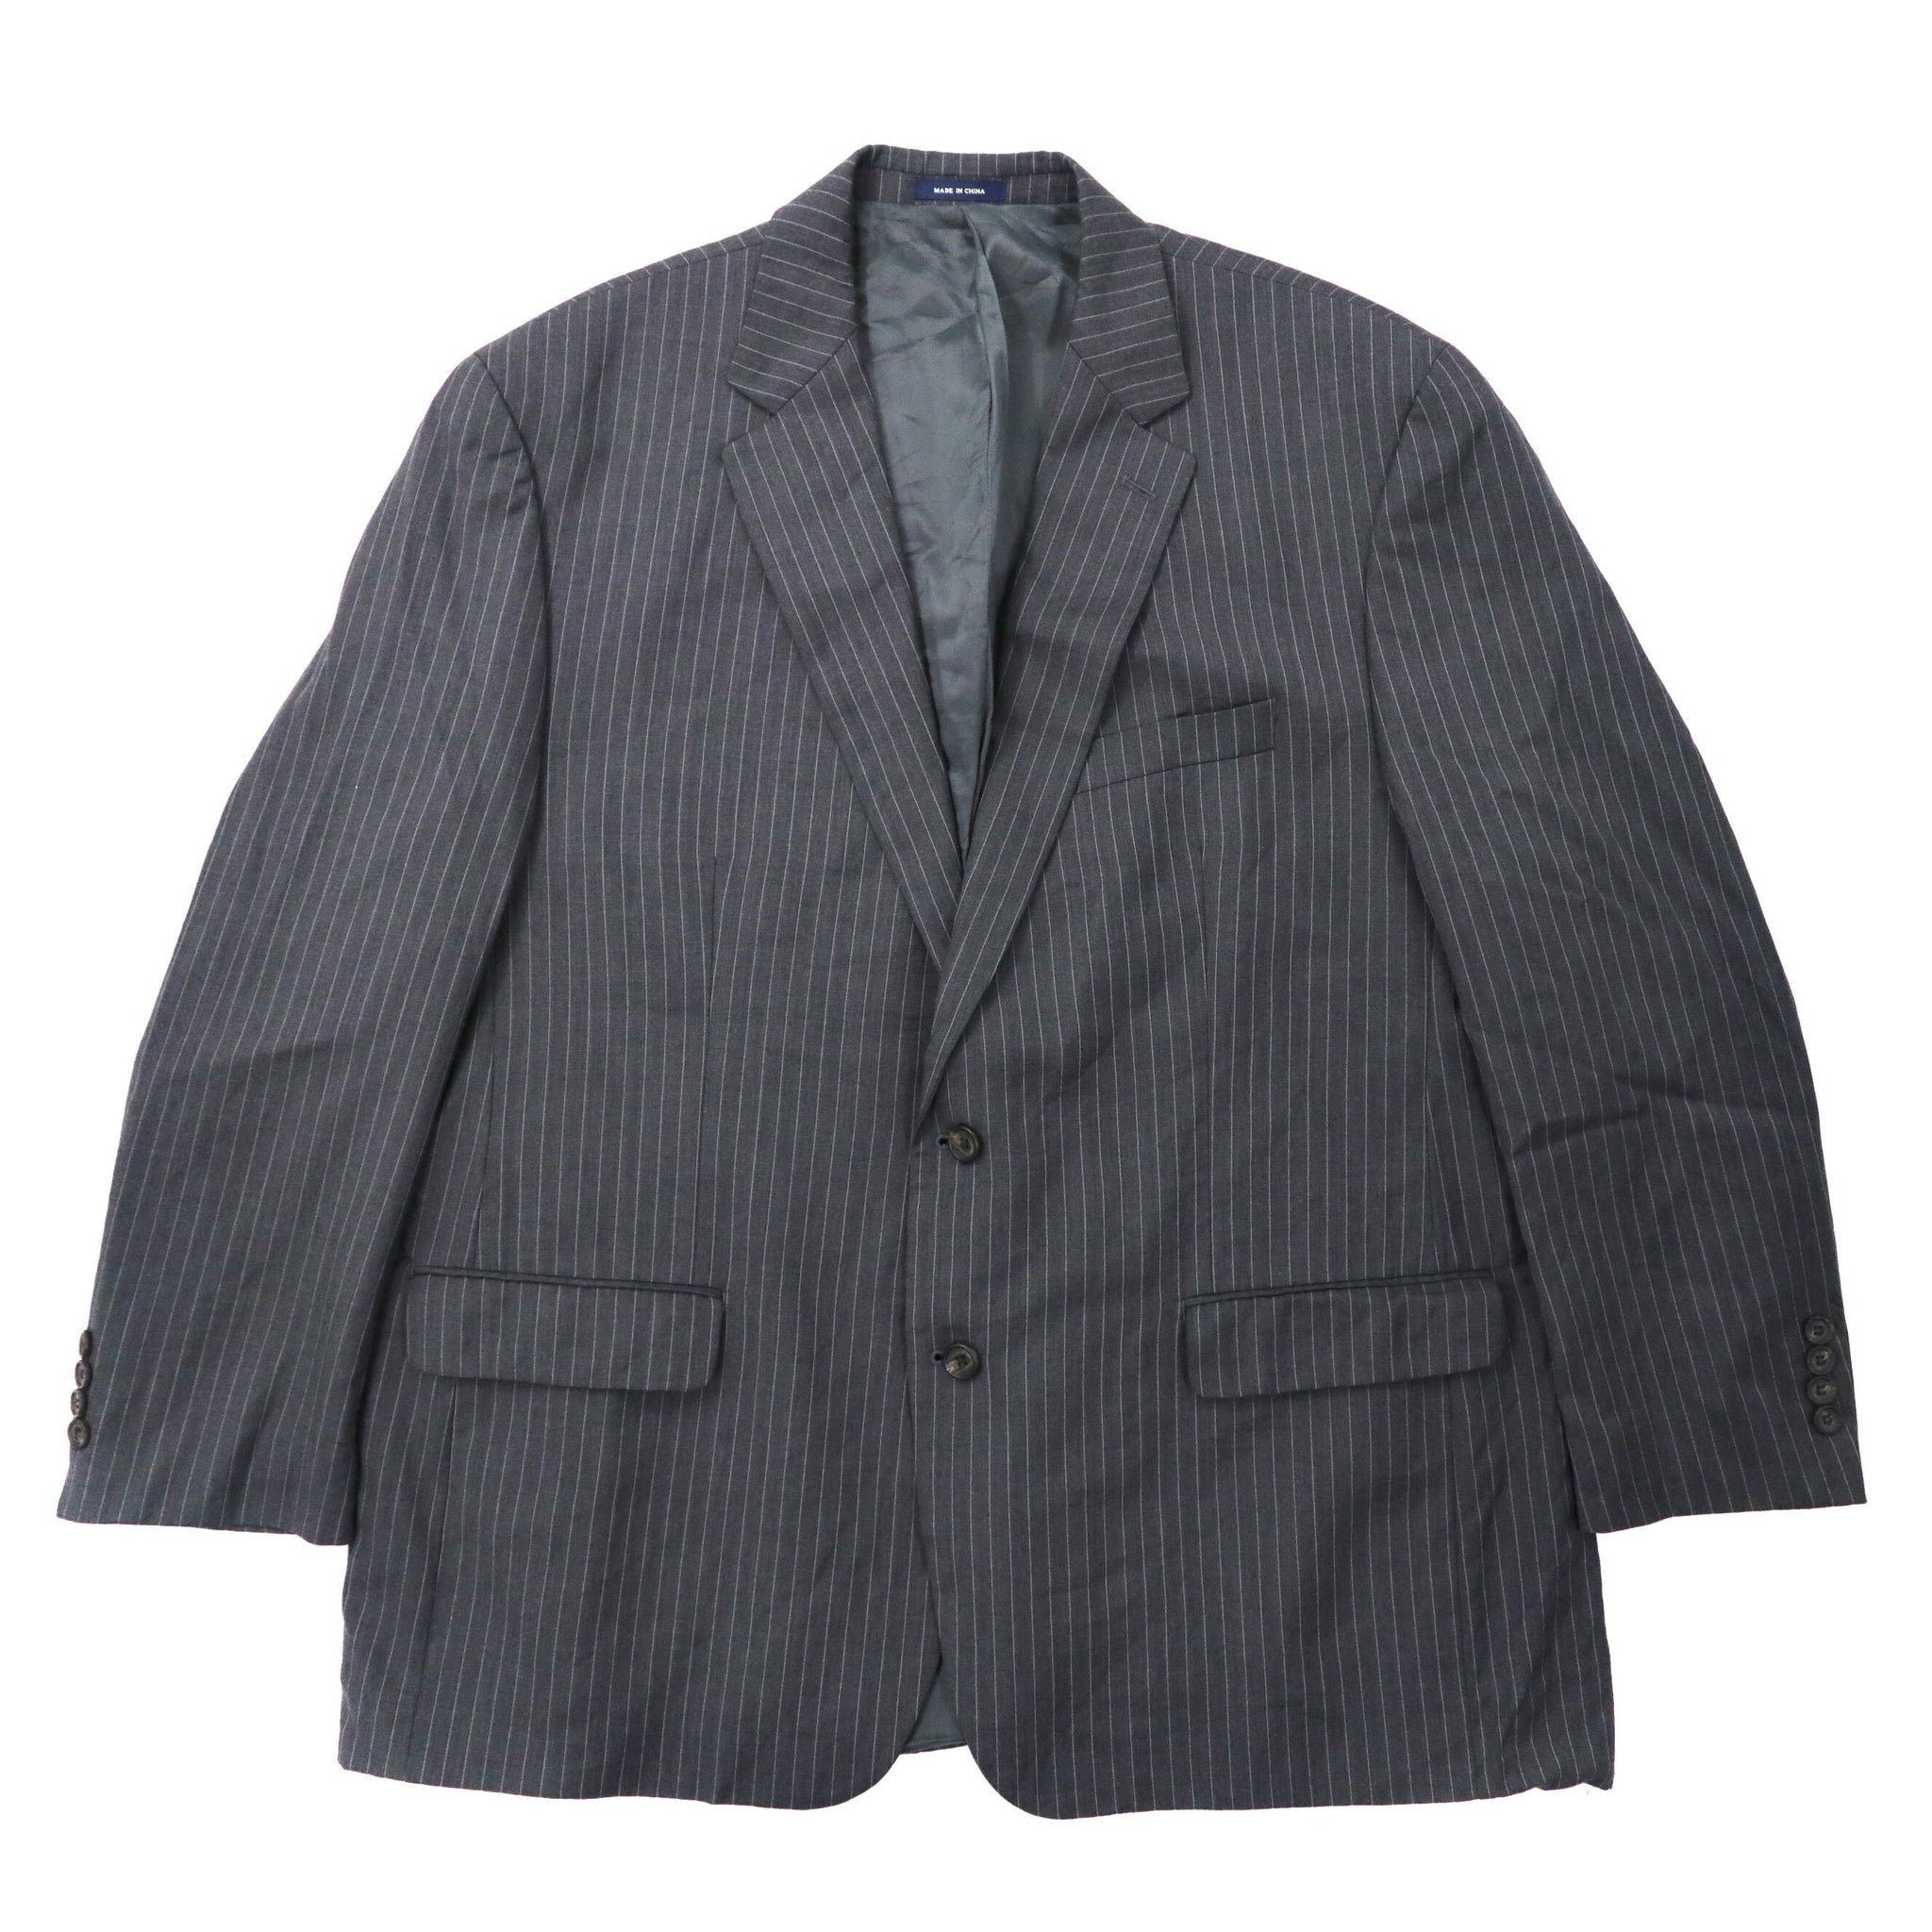 RALPH LAUREN 2B Tailored Jacket 48 Gray Striped Wool